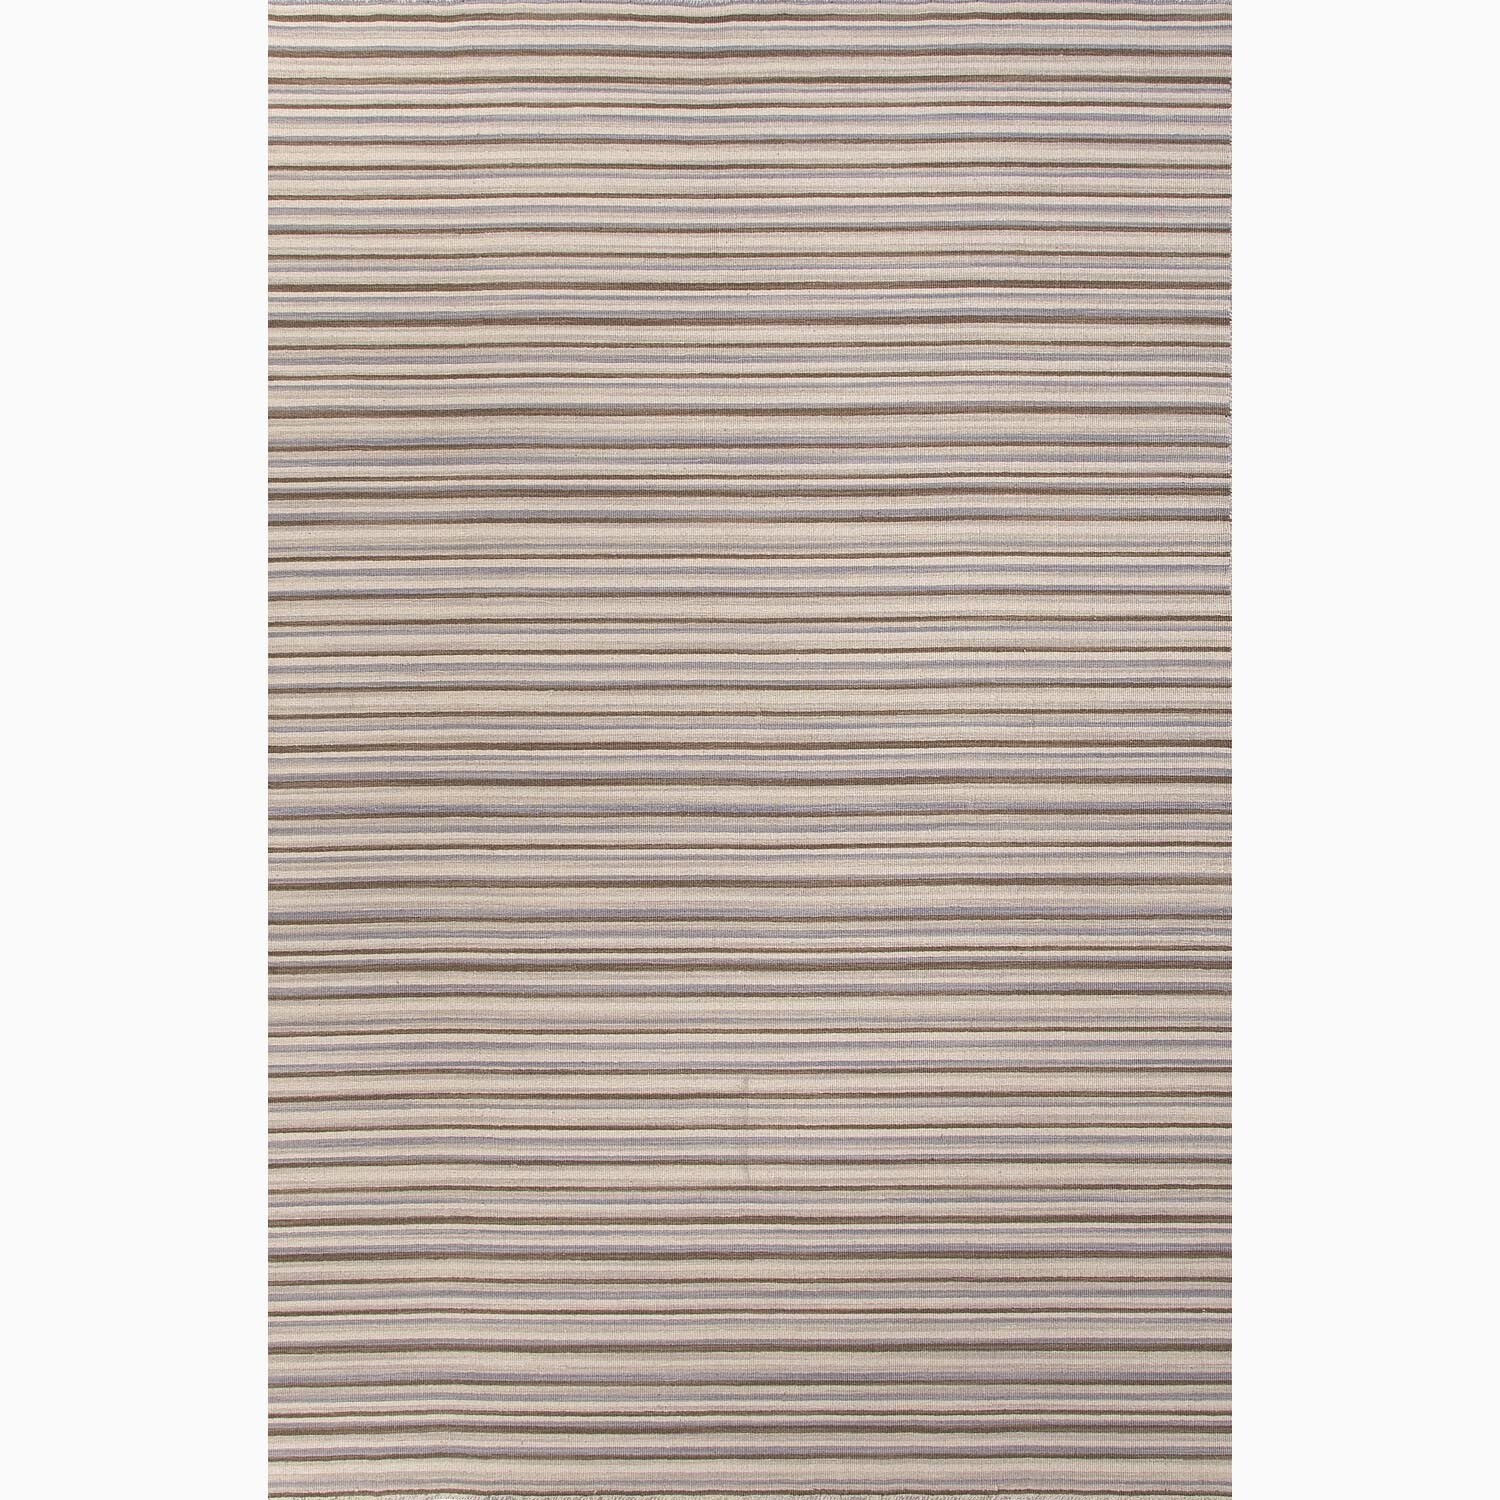 Hand made Stripe Pattern Gray/ Ivory 100 percent Wool Rug (5x8)